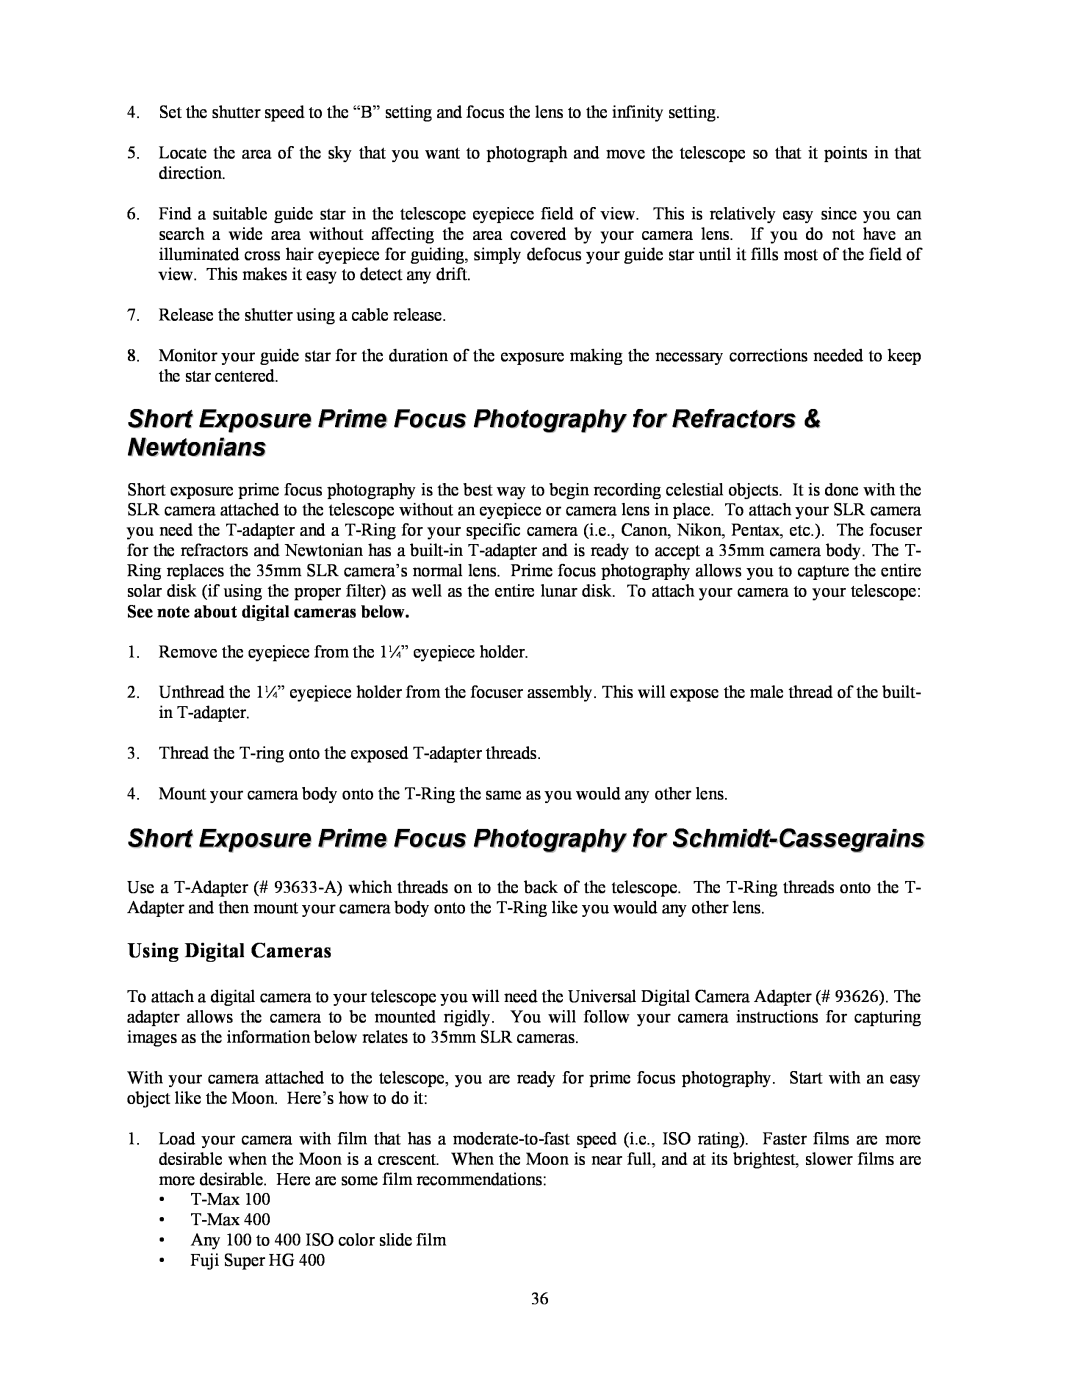 Celestron OMNI XLT 102 manual Short Exposure Prime Focus Photography for Refractors & Newtonians, Using Digital Cameras 